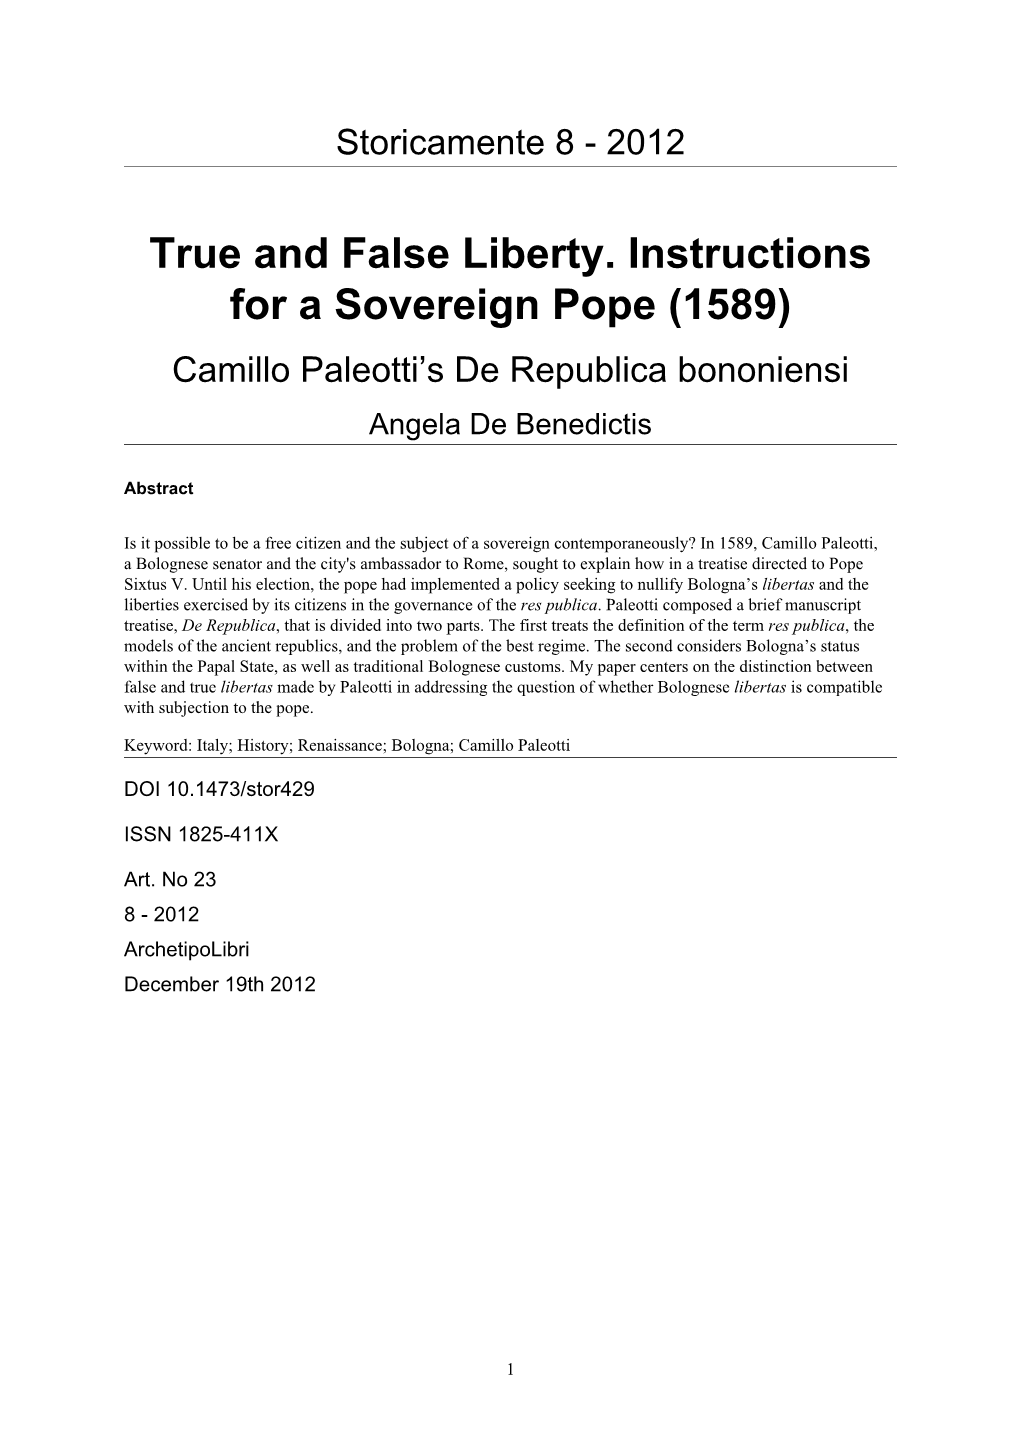 True and False Liberty. Instructions for a Sovereign Pope (1589) Camillo Paleotti’S De Republica Bononiensi Angela De Benedictis